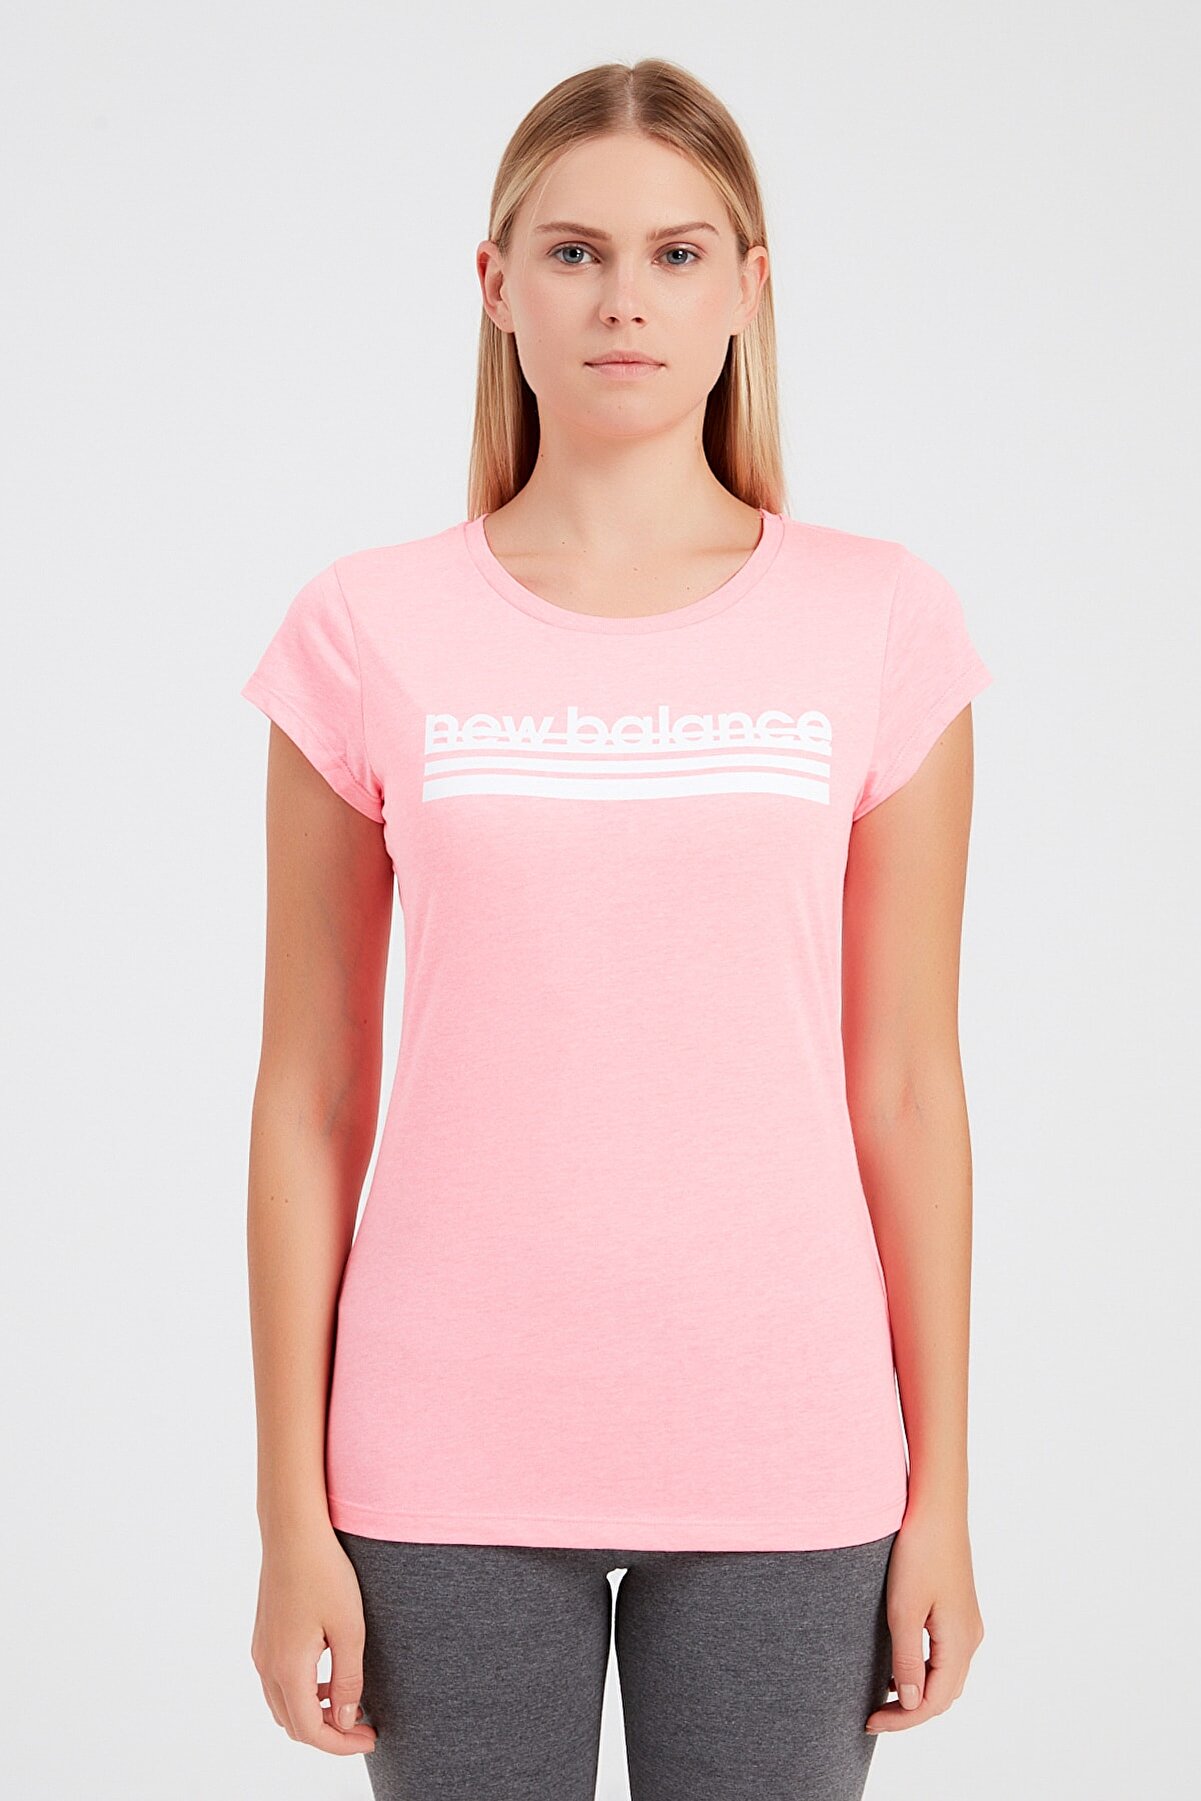 New Balance Kadın T-Shirt - NB VOM TEE - V-WTT918-PNK